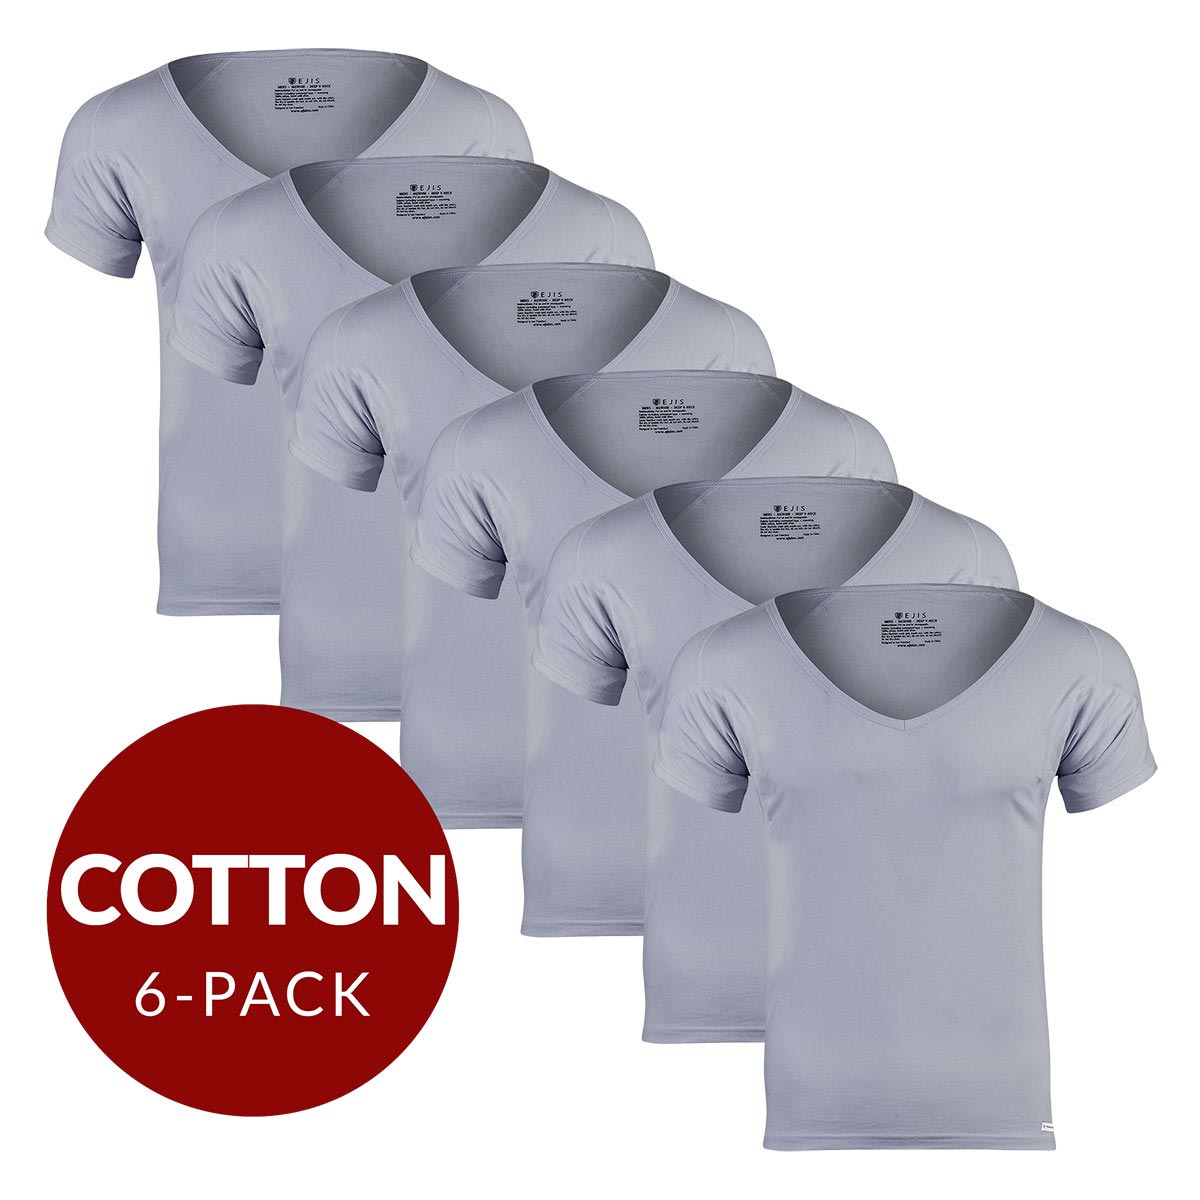 Deep V Cotton Sweat Proof Undershirt For Men - Grey 6-Pack - Ejis